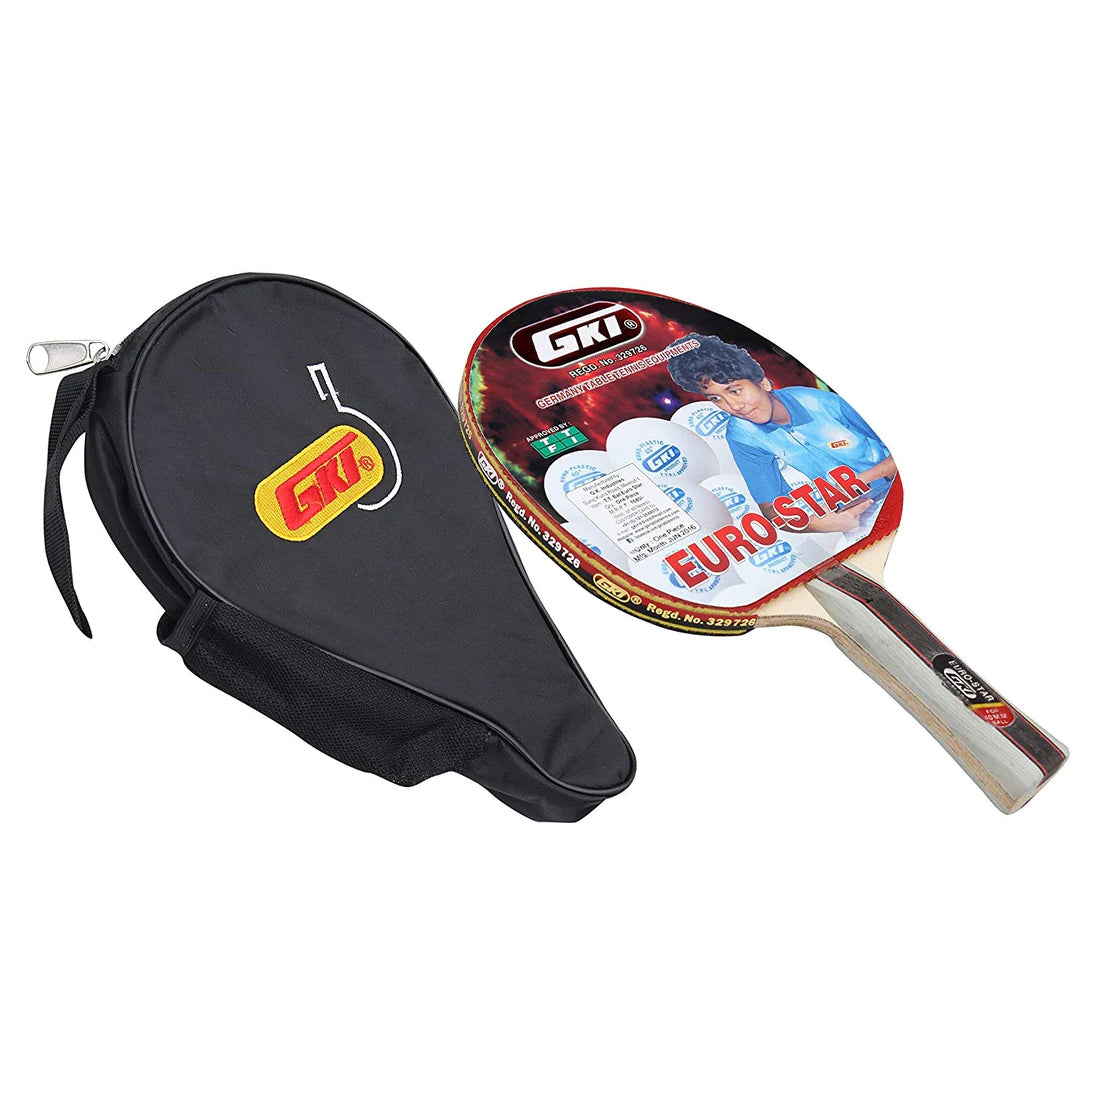 GKI Euro star Table Tennis Racket - Best Price online Prokicksports.com